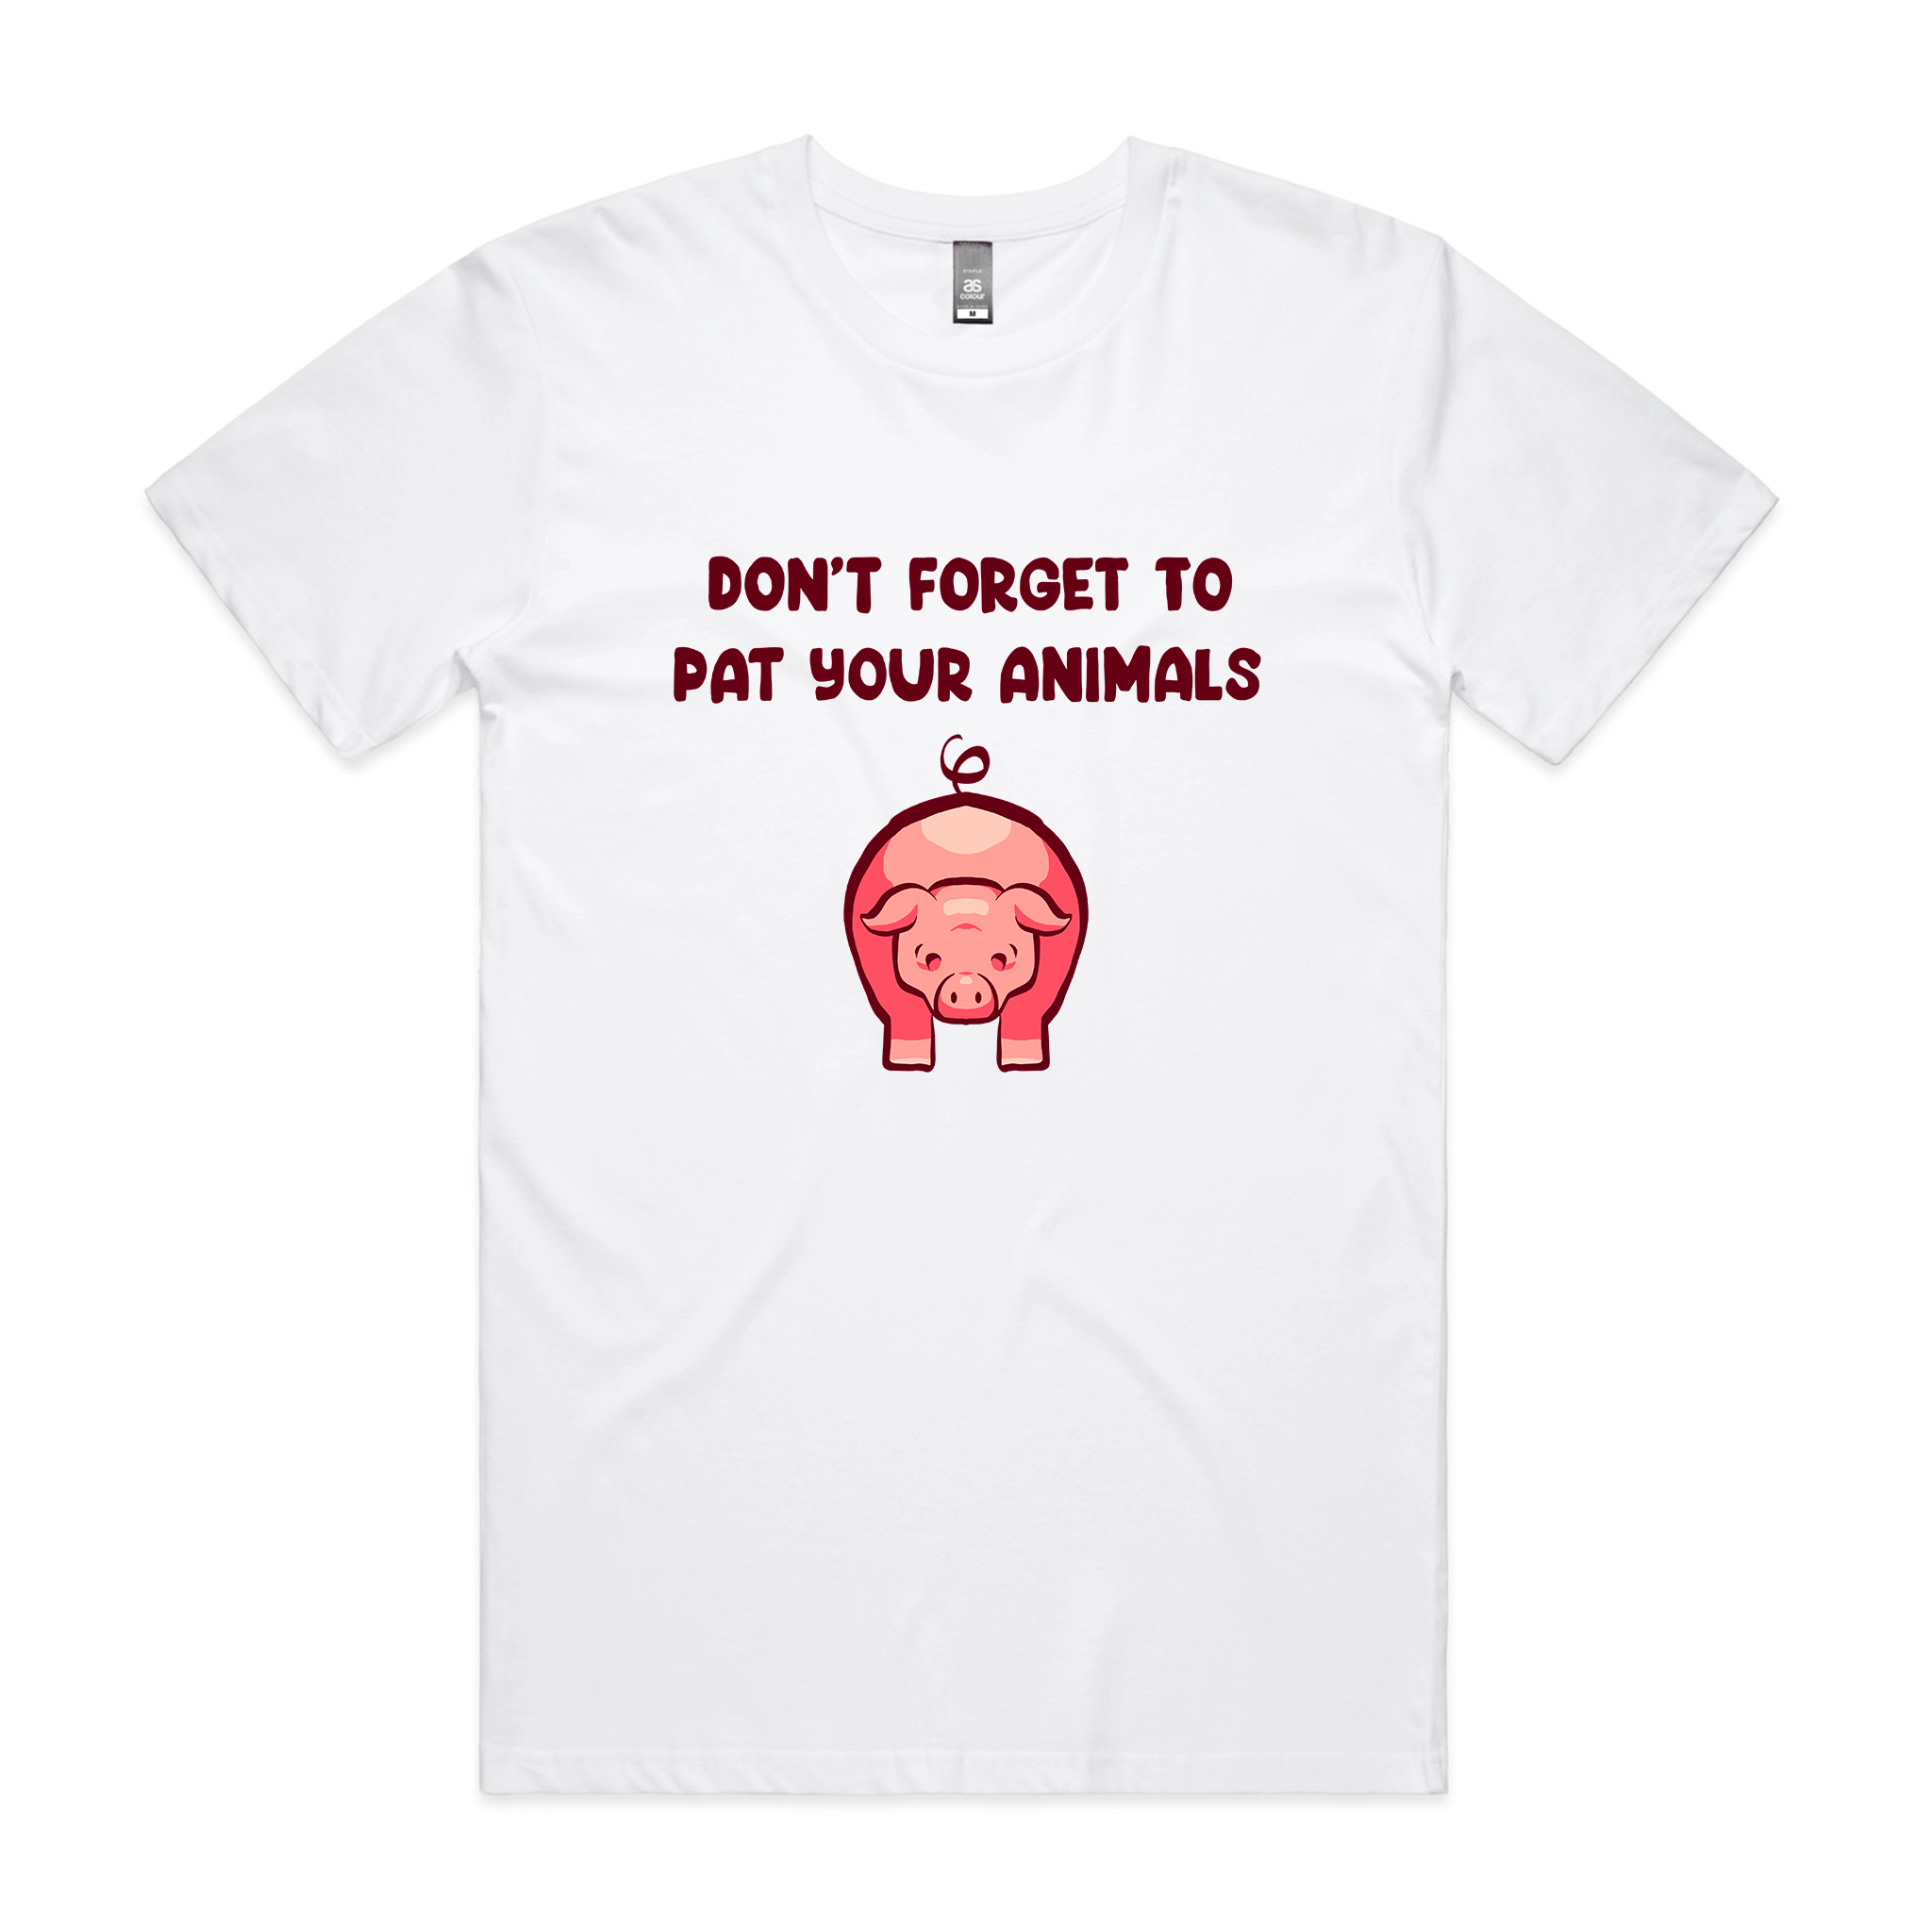 Pat Your Animals Tee